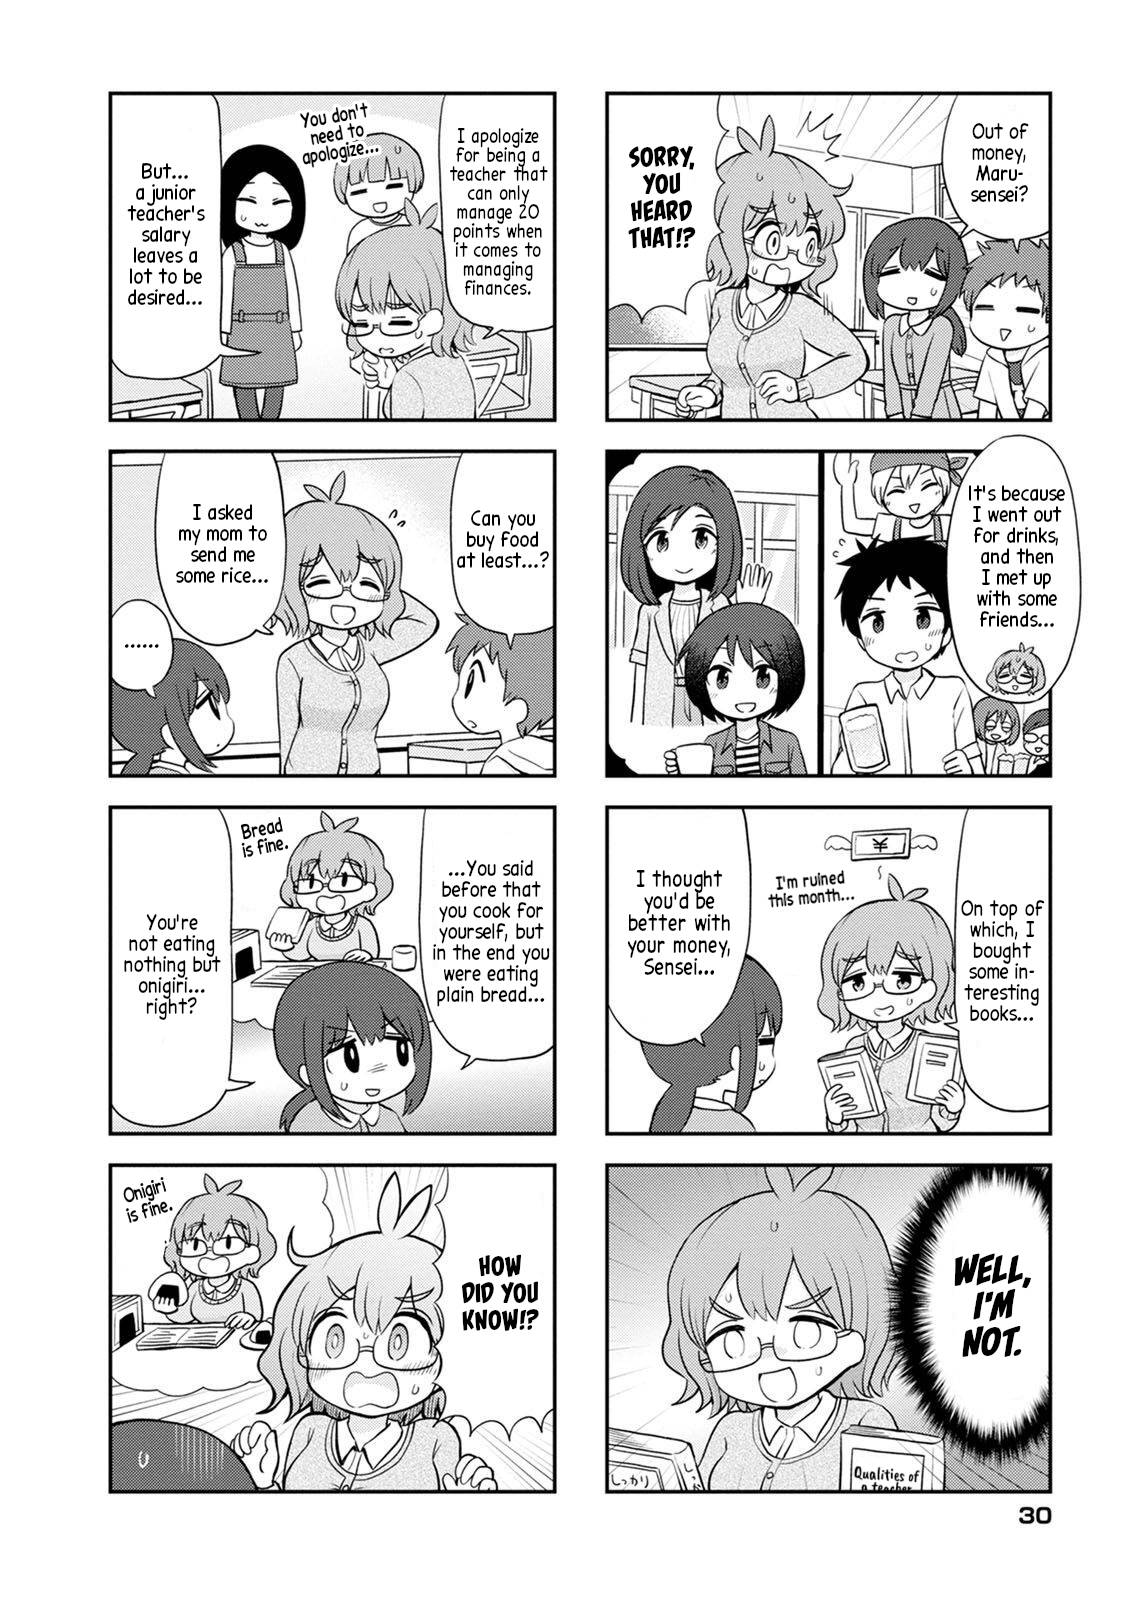 Maru-Sensei's ** Is Cute. - chapter 4 - #2